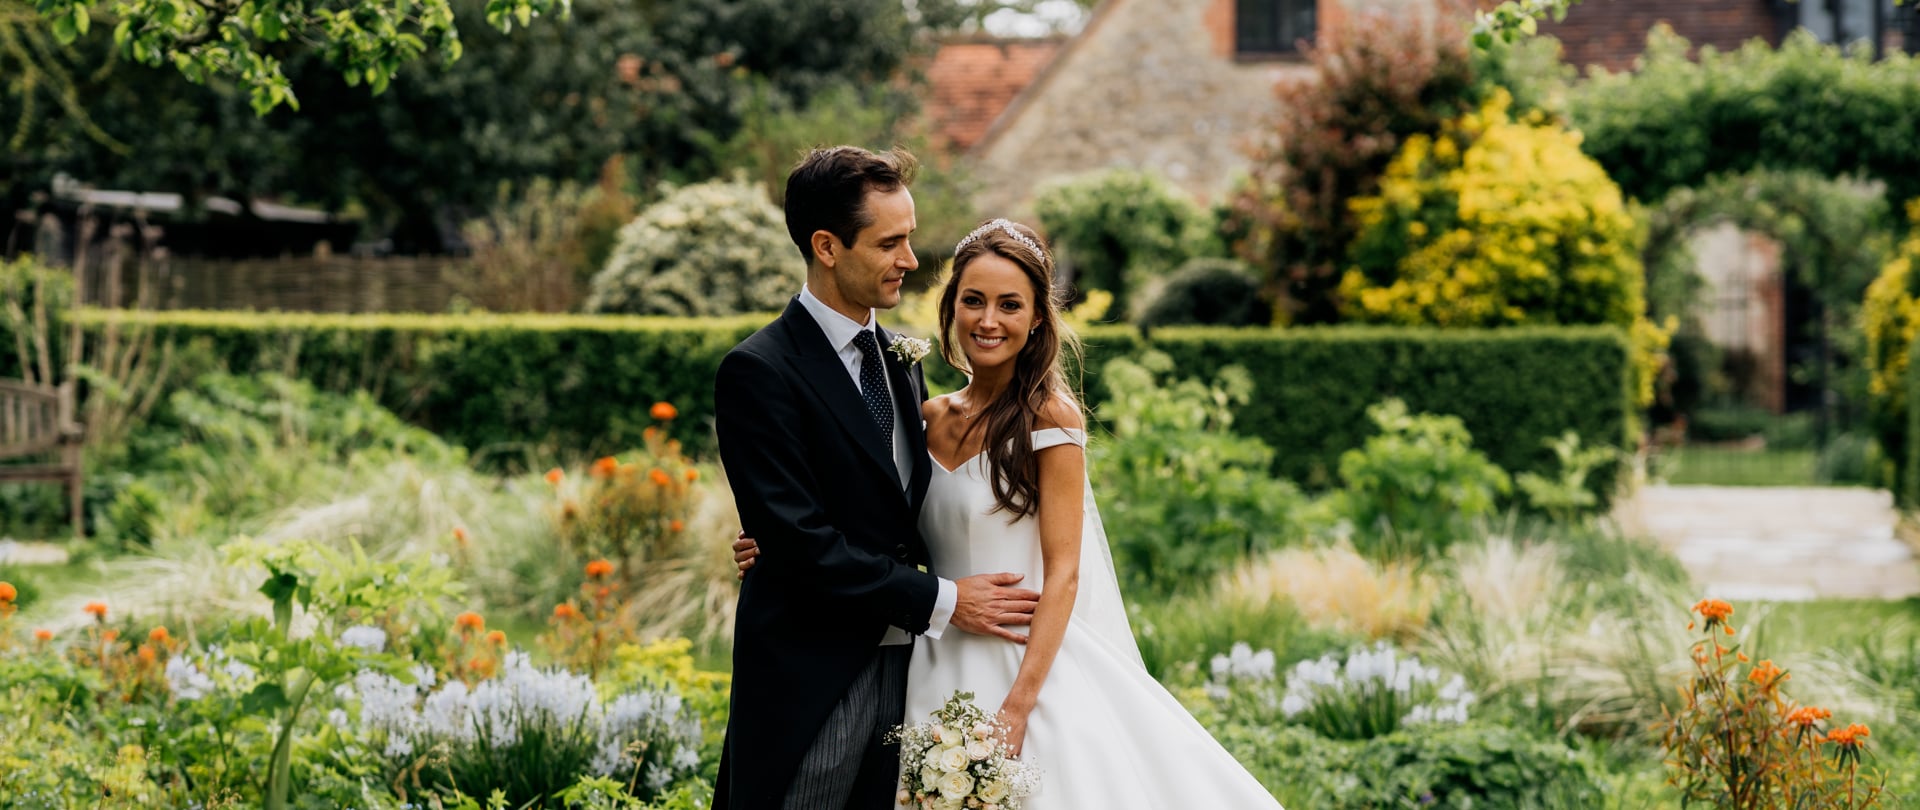 Felicity & William Wedding Video Filmed atOxfordshire,England